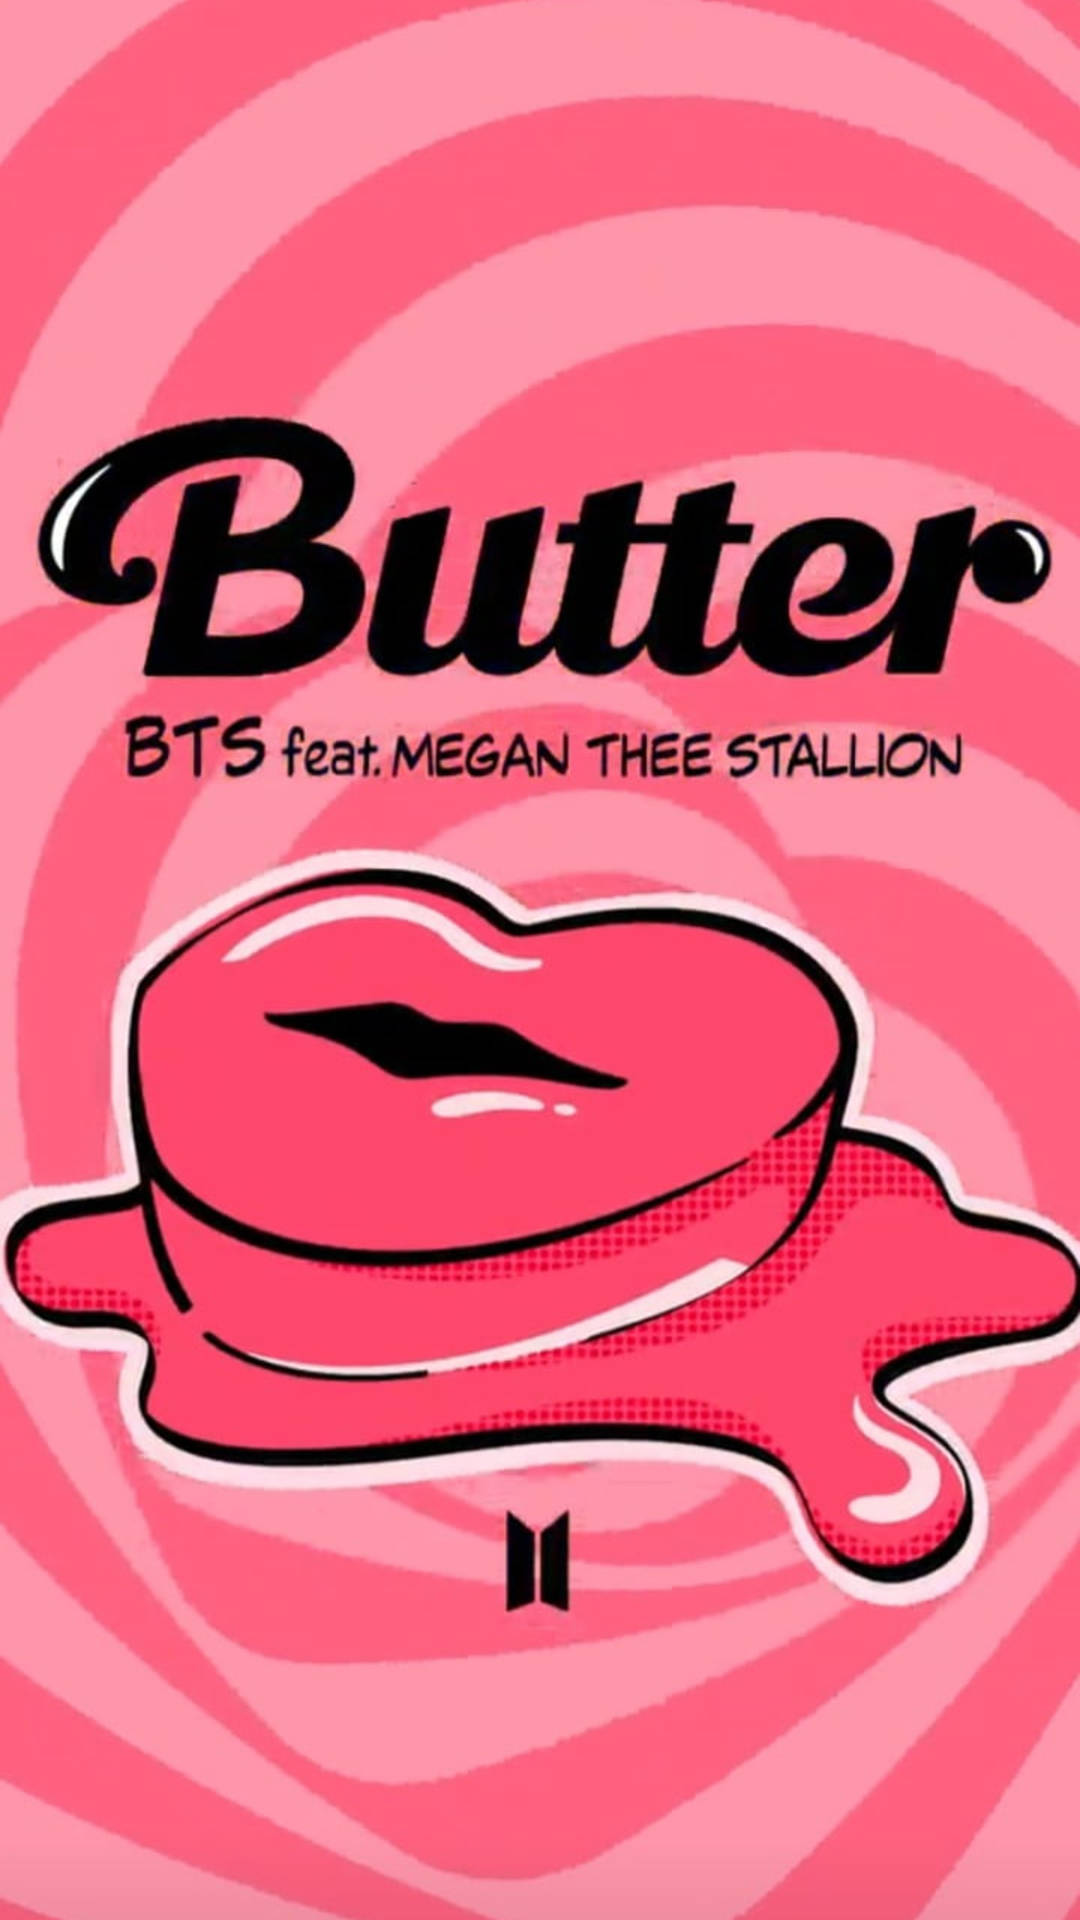 Btsbutter Feat Megan Thee Stallion Wallpaper